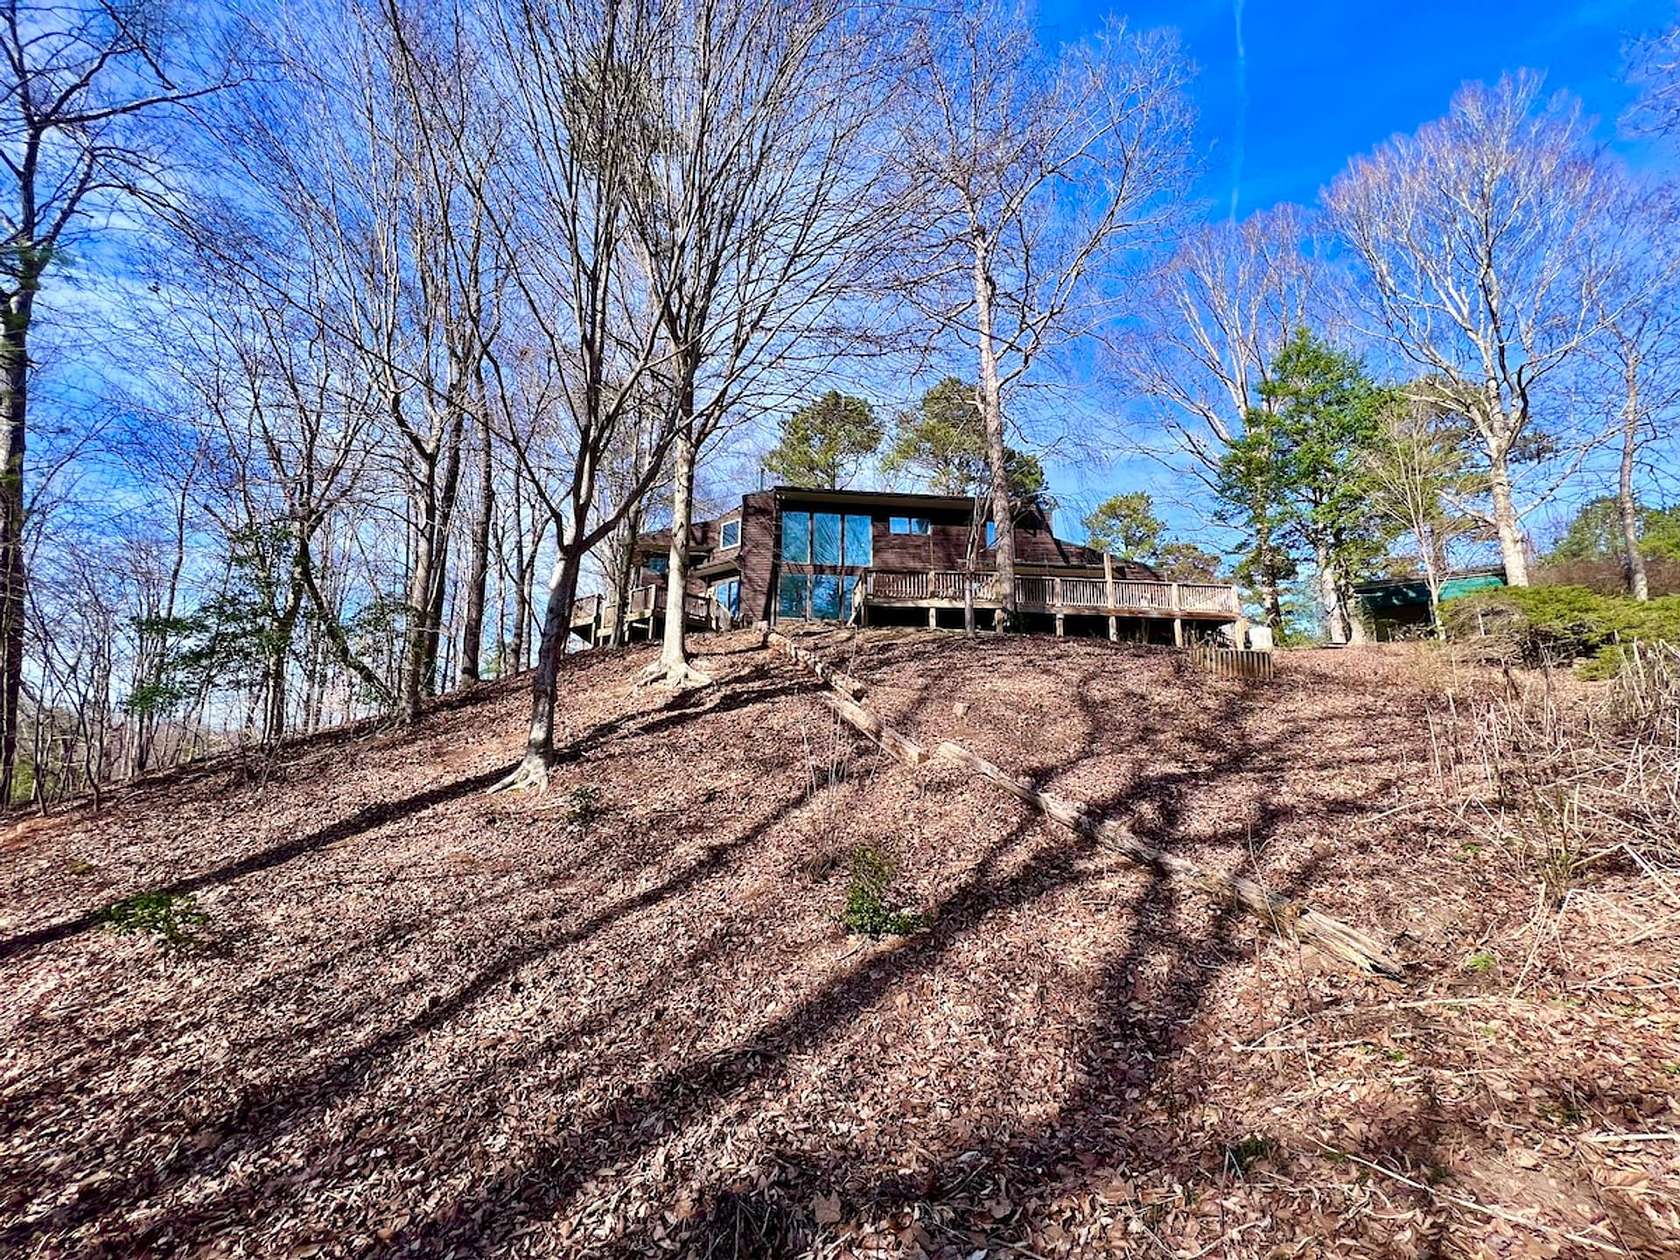 105 Acres of Improved Land for Sale in Castalia, North Carolina